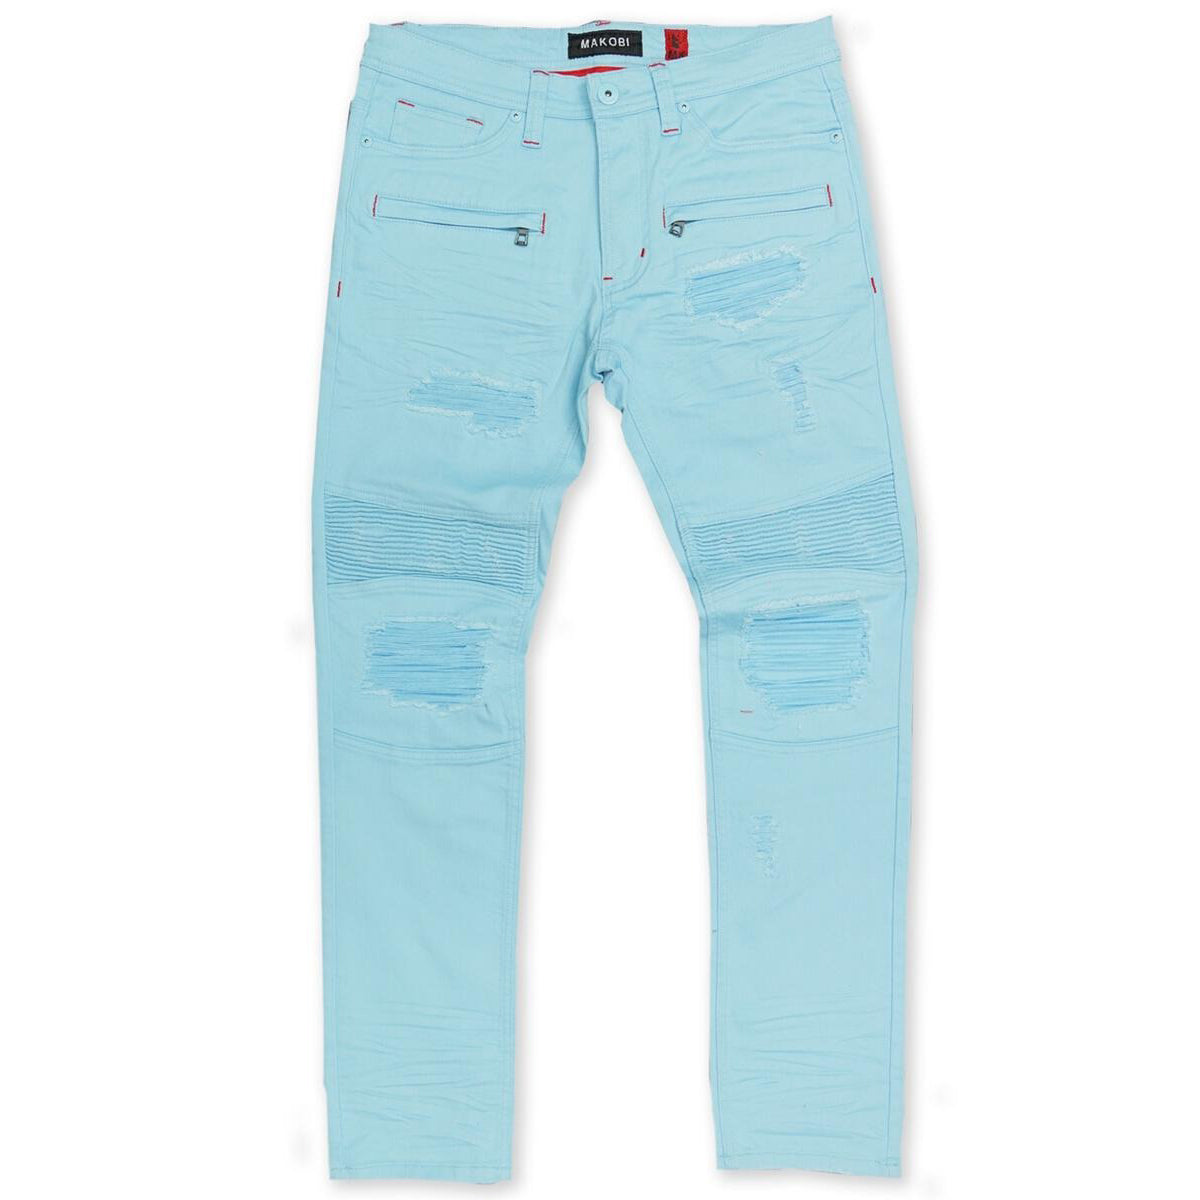 M1960 Shredded Twill Jeans - Blue